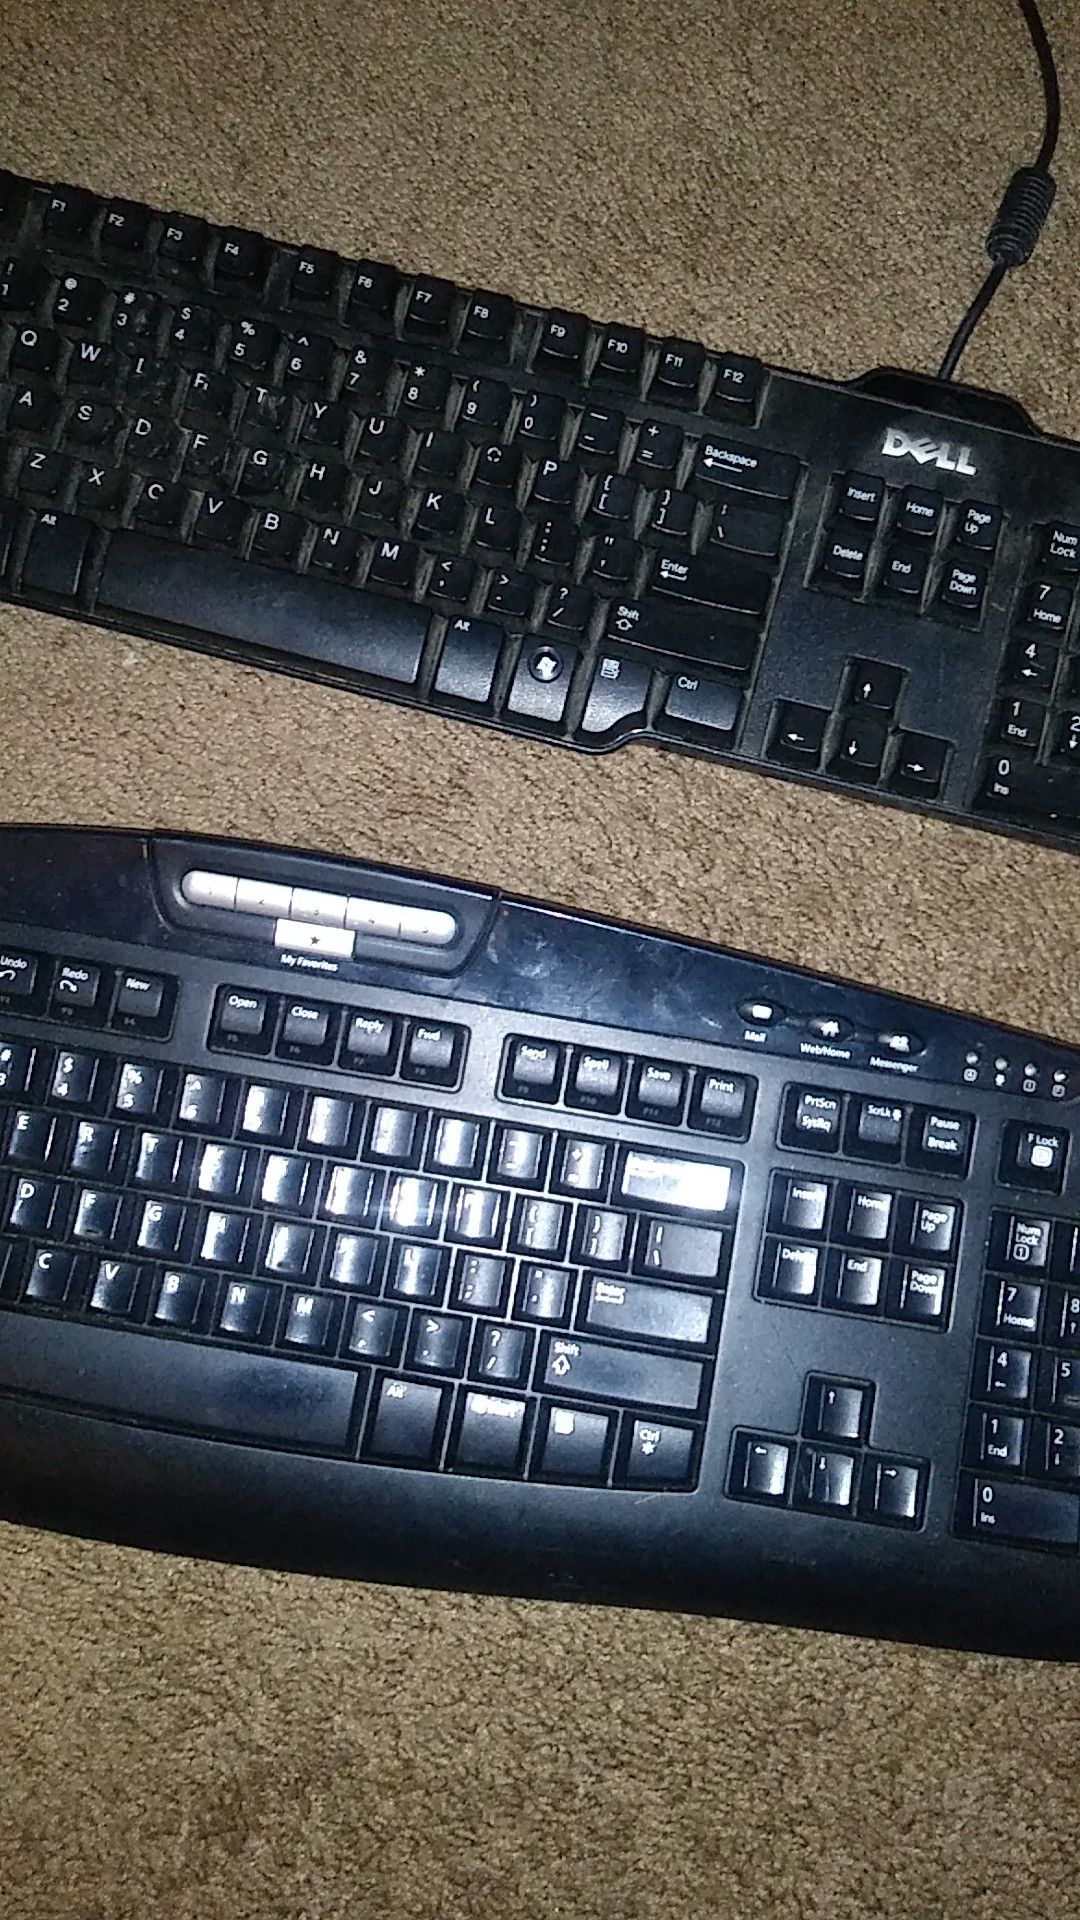 Computer keyboards